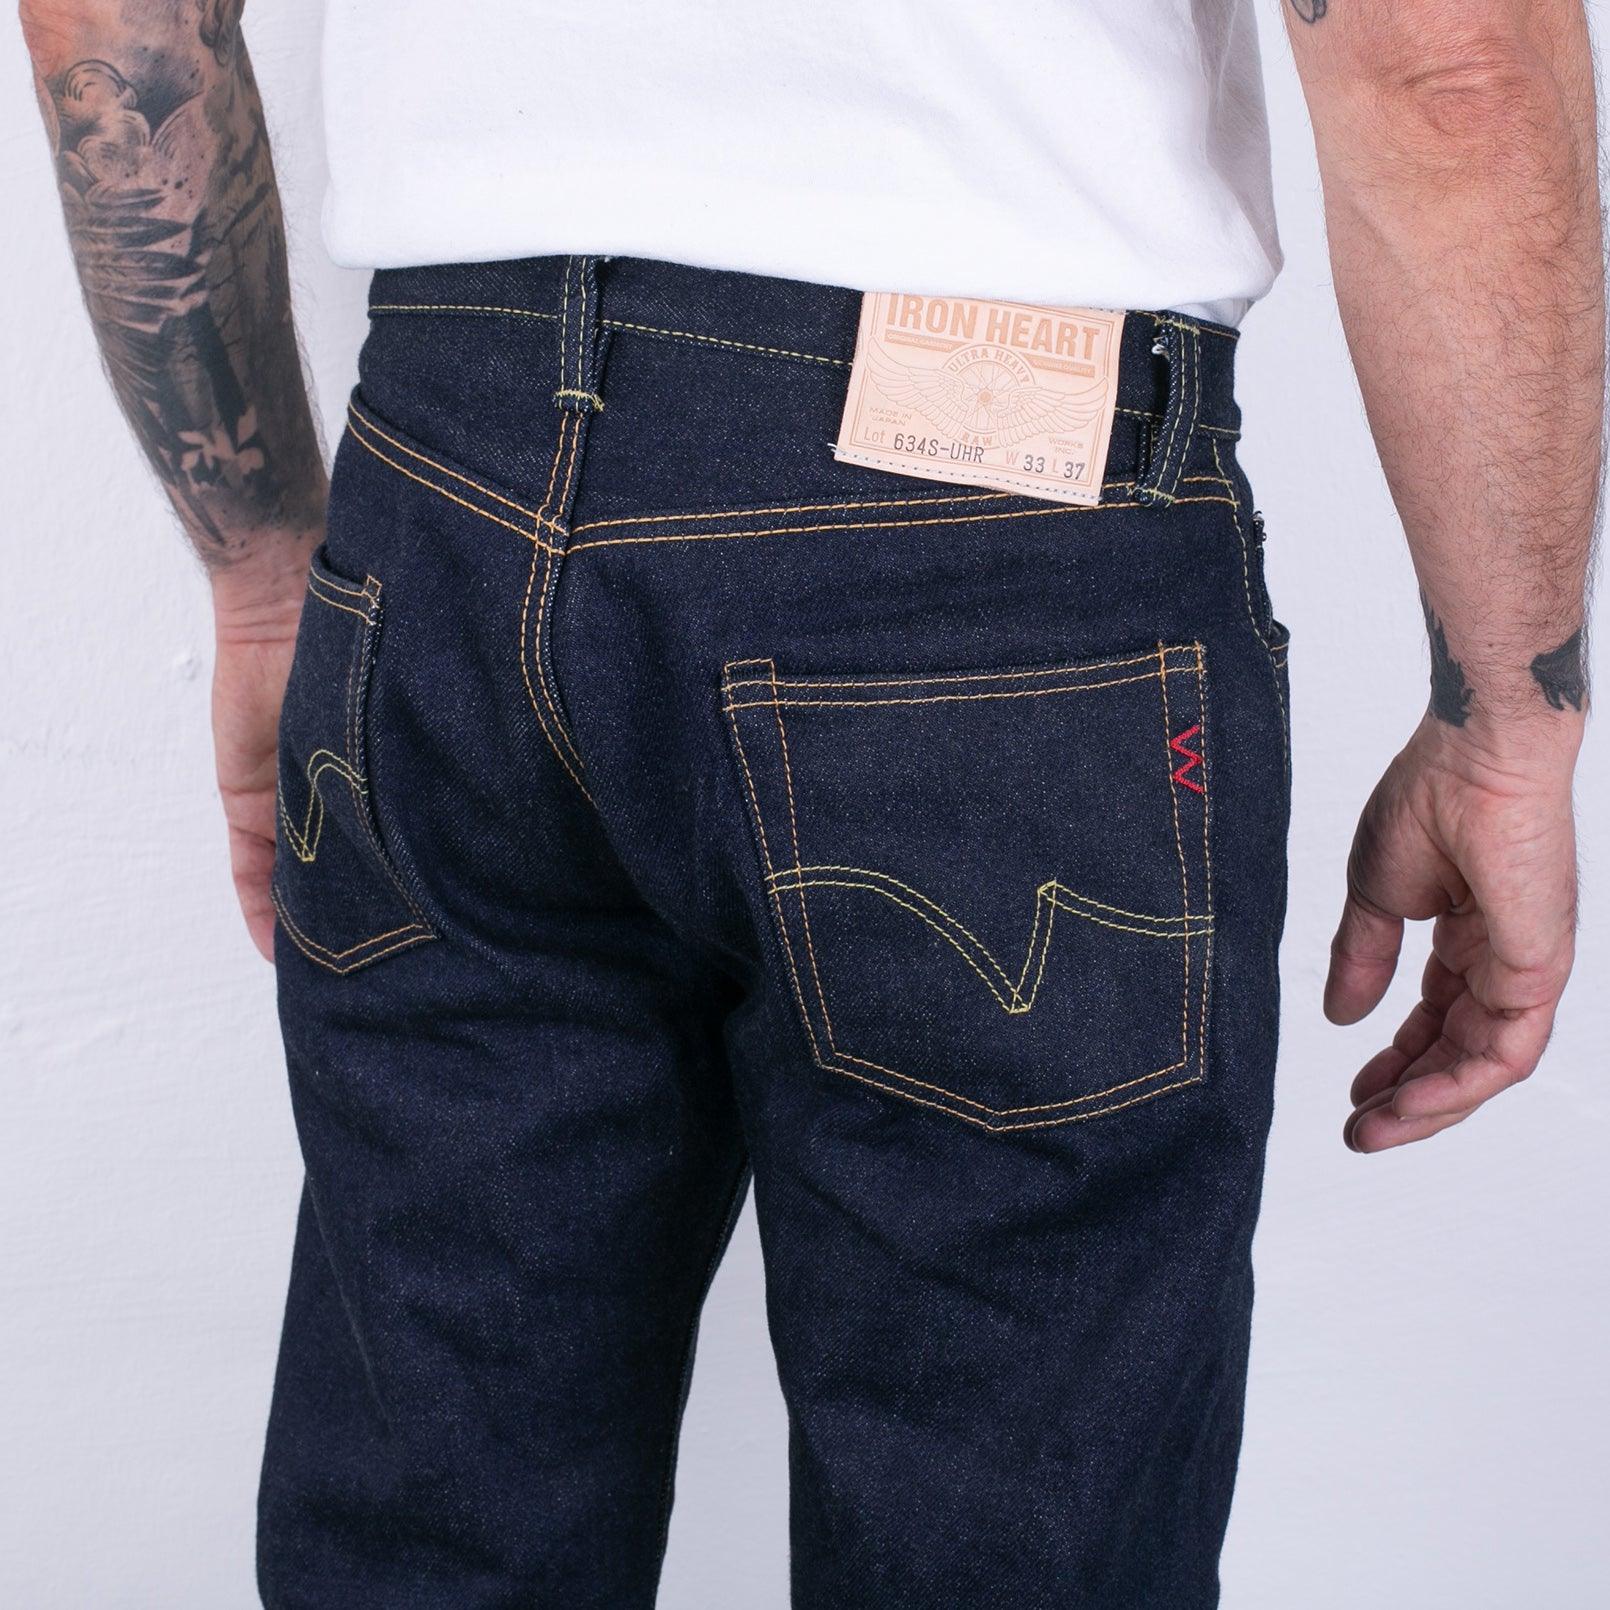 IH-634S-UHR - 21/23oz Raw Selvedge Denim Straight Cut Jeans Indigo